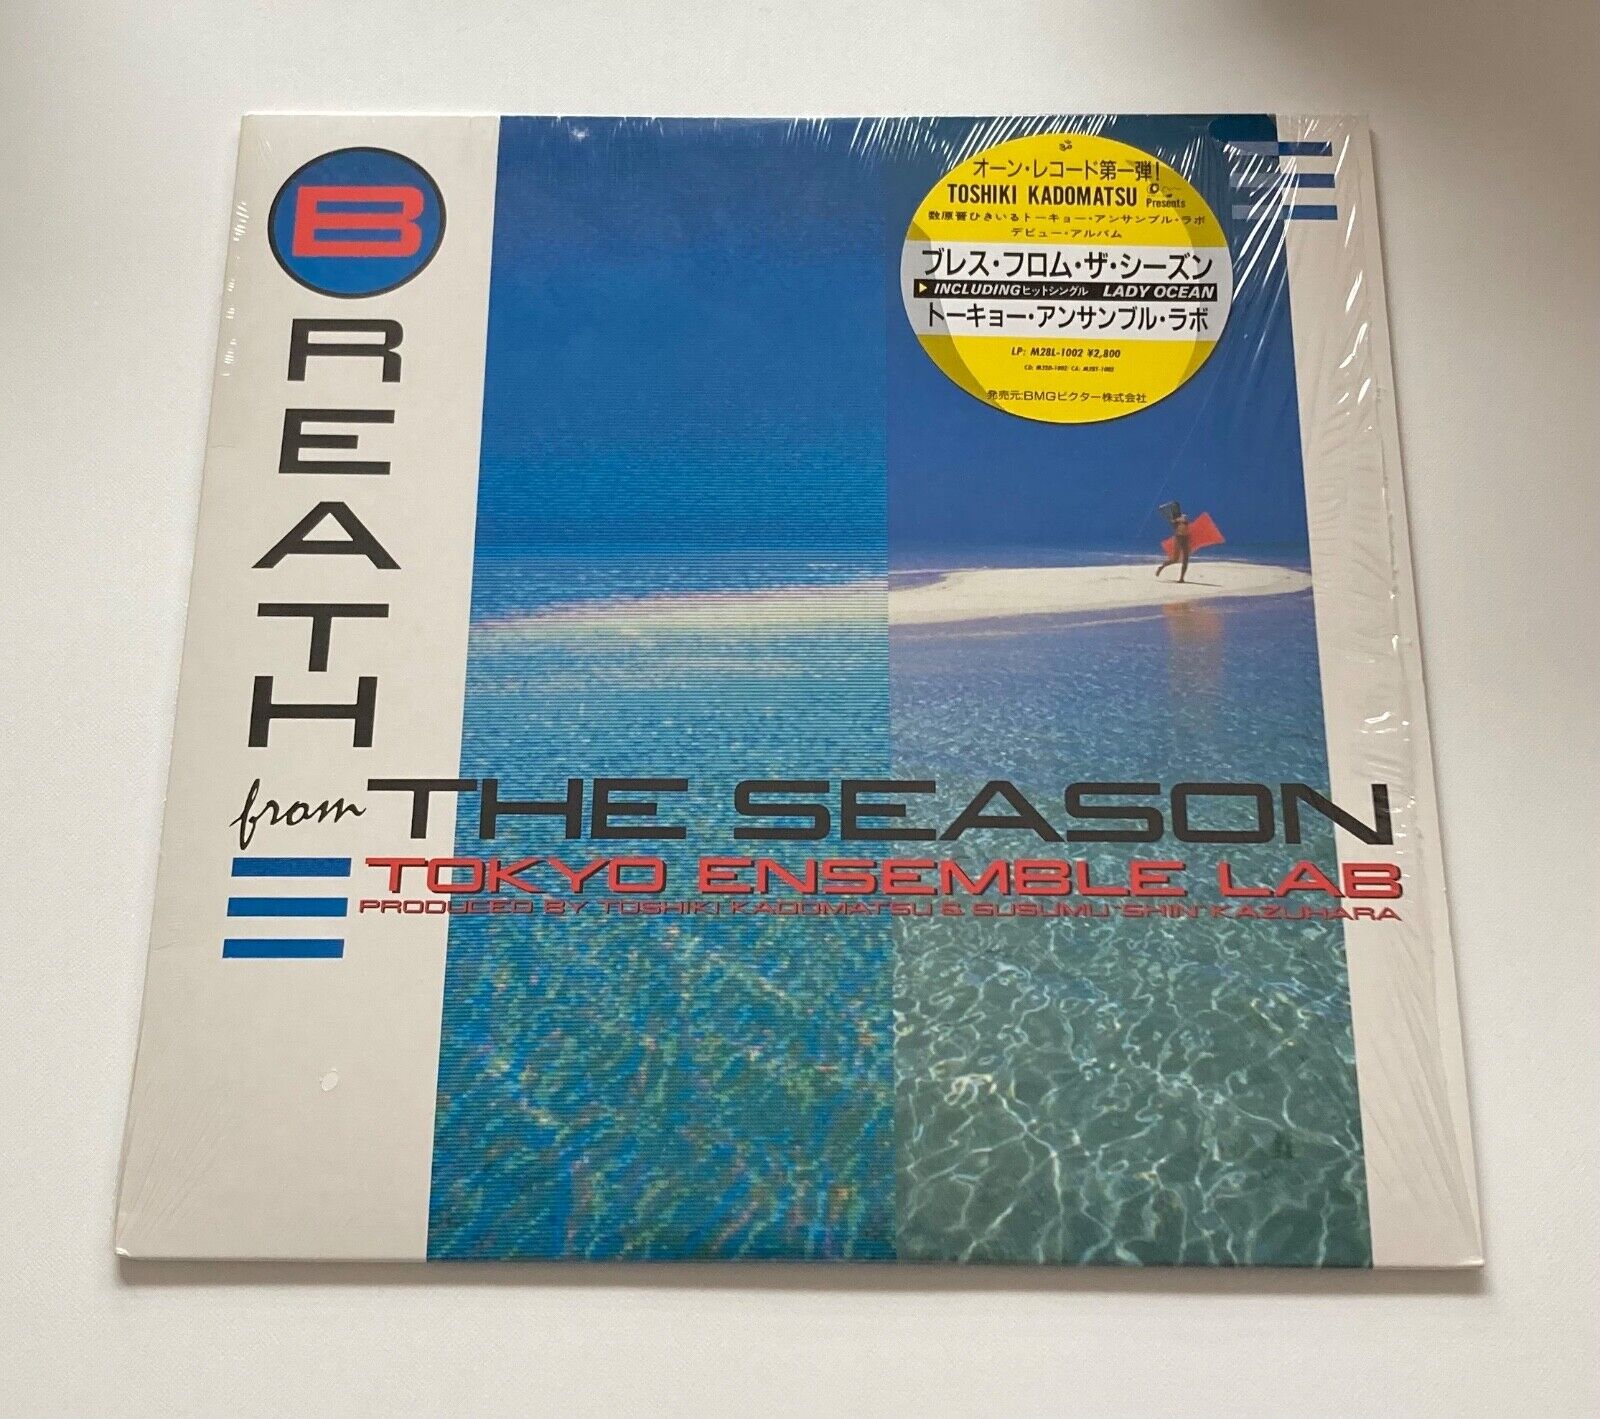 [LP] Tokyo Ensemble Lab - Breath From The Season w/HypeST, shrink Kadomatsu Prod